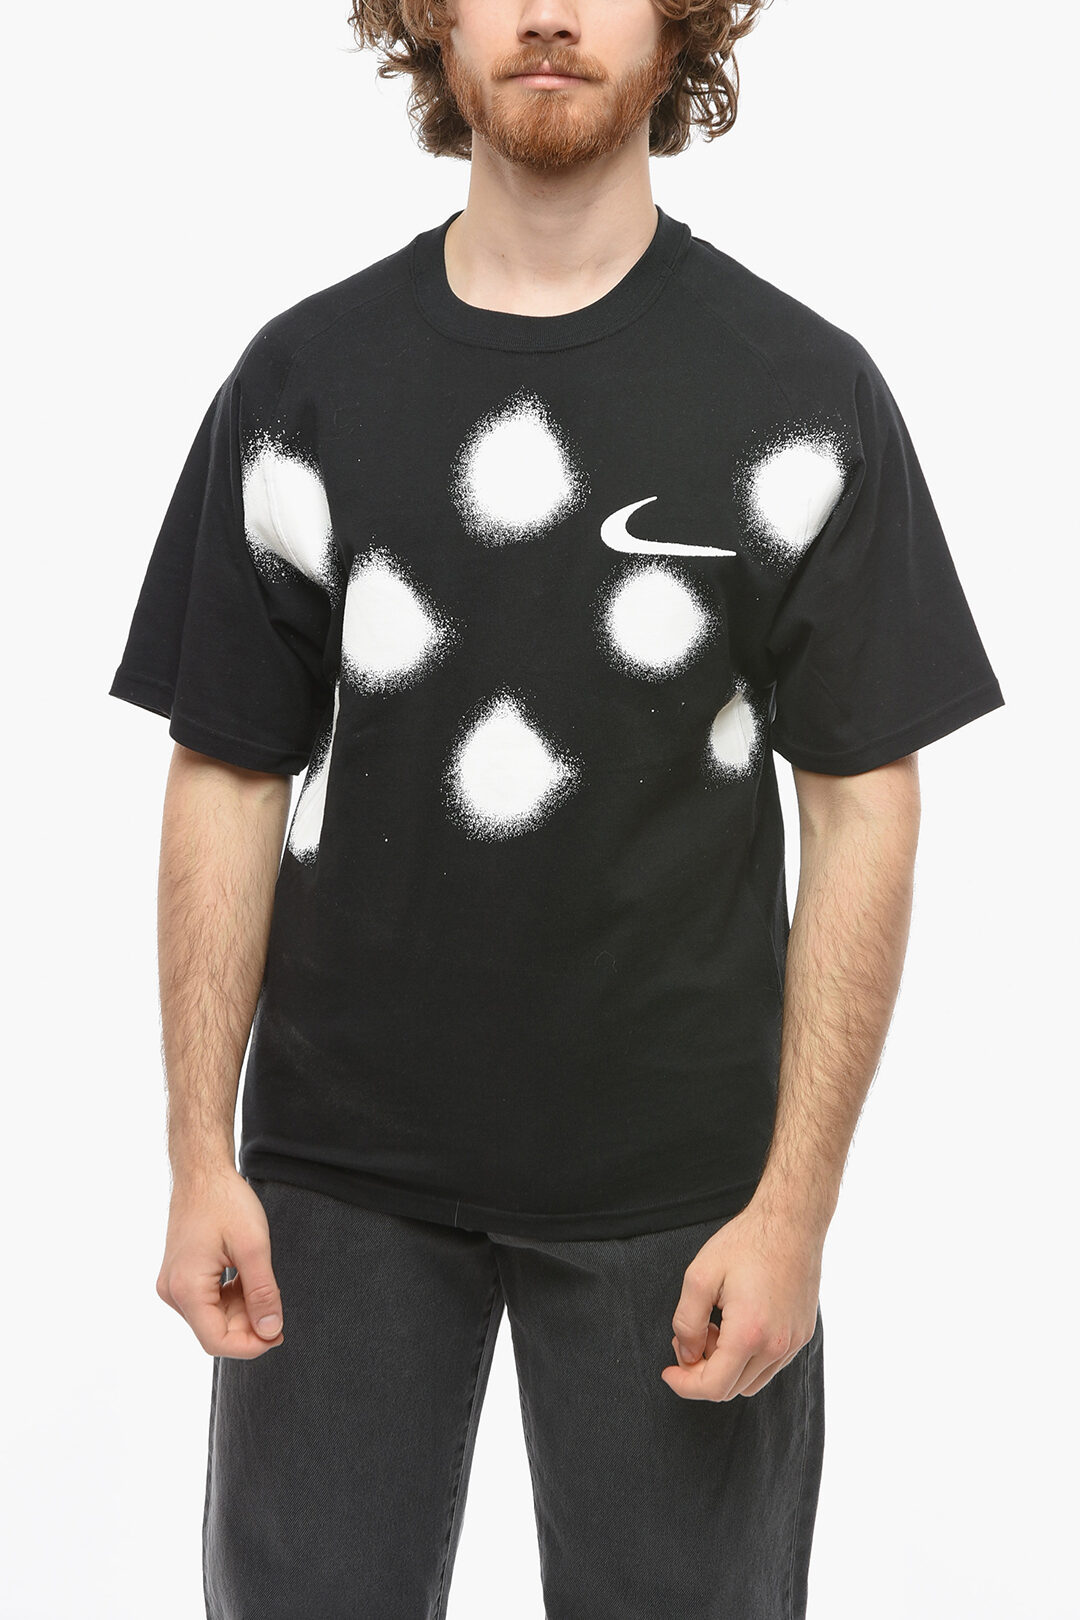 Nike off white Tシャツ   Black